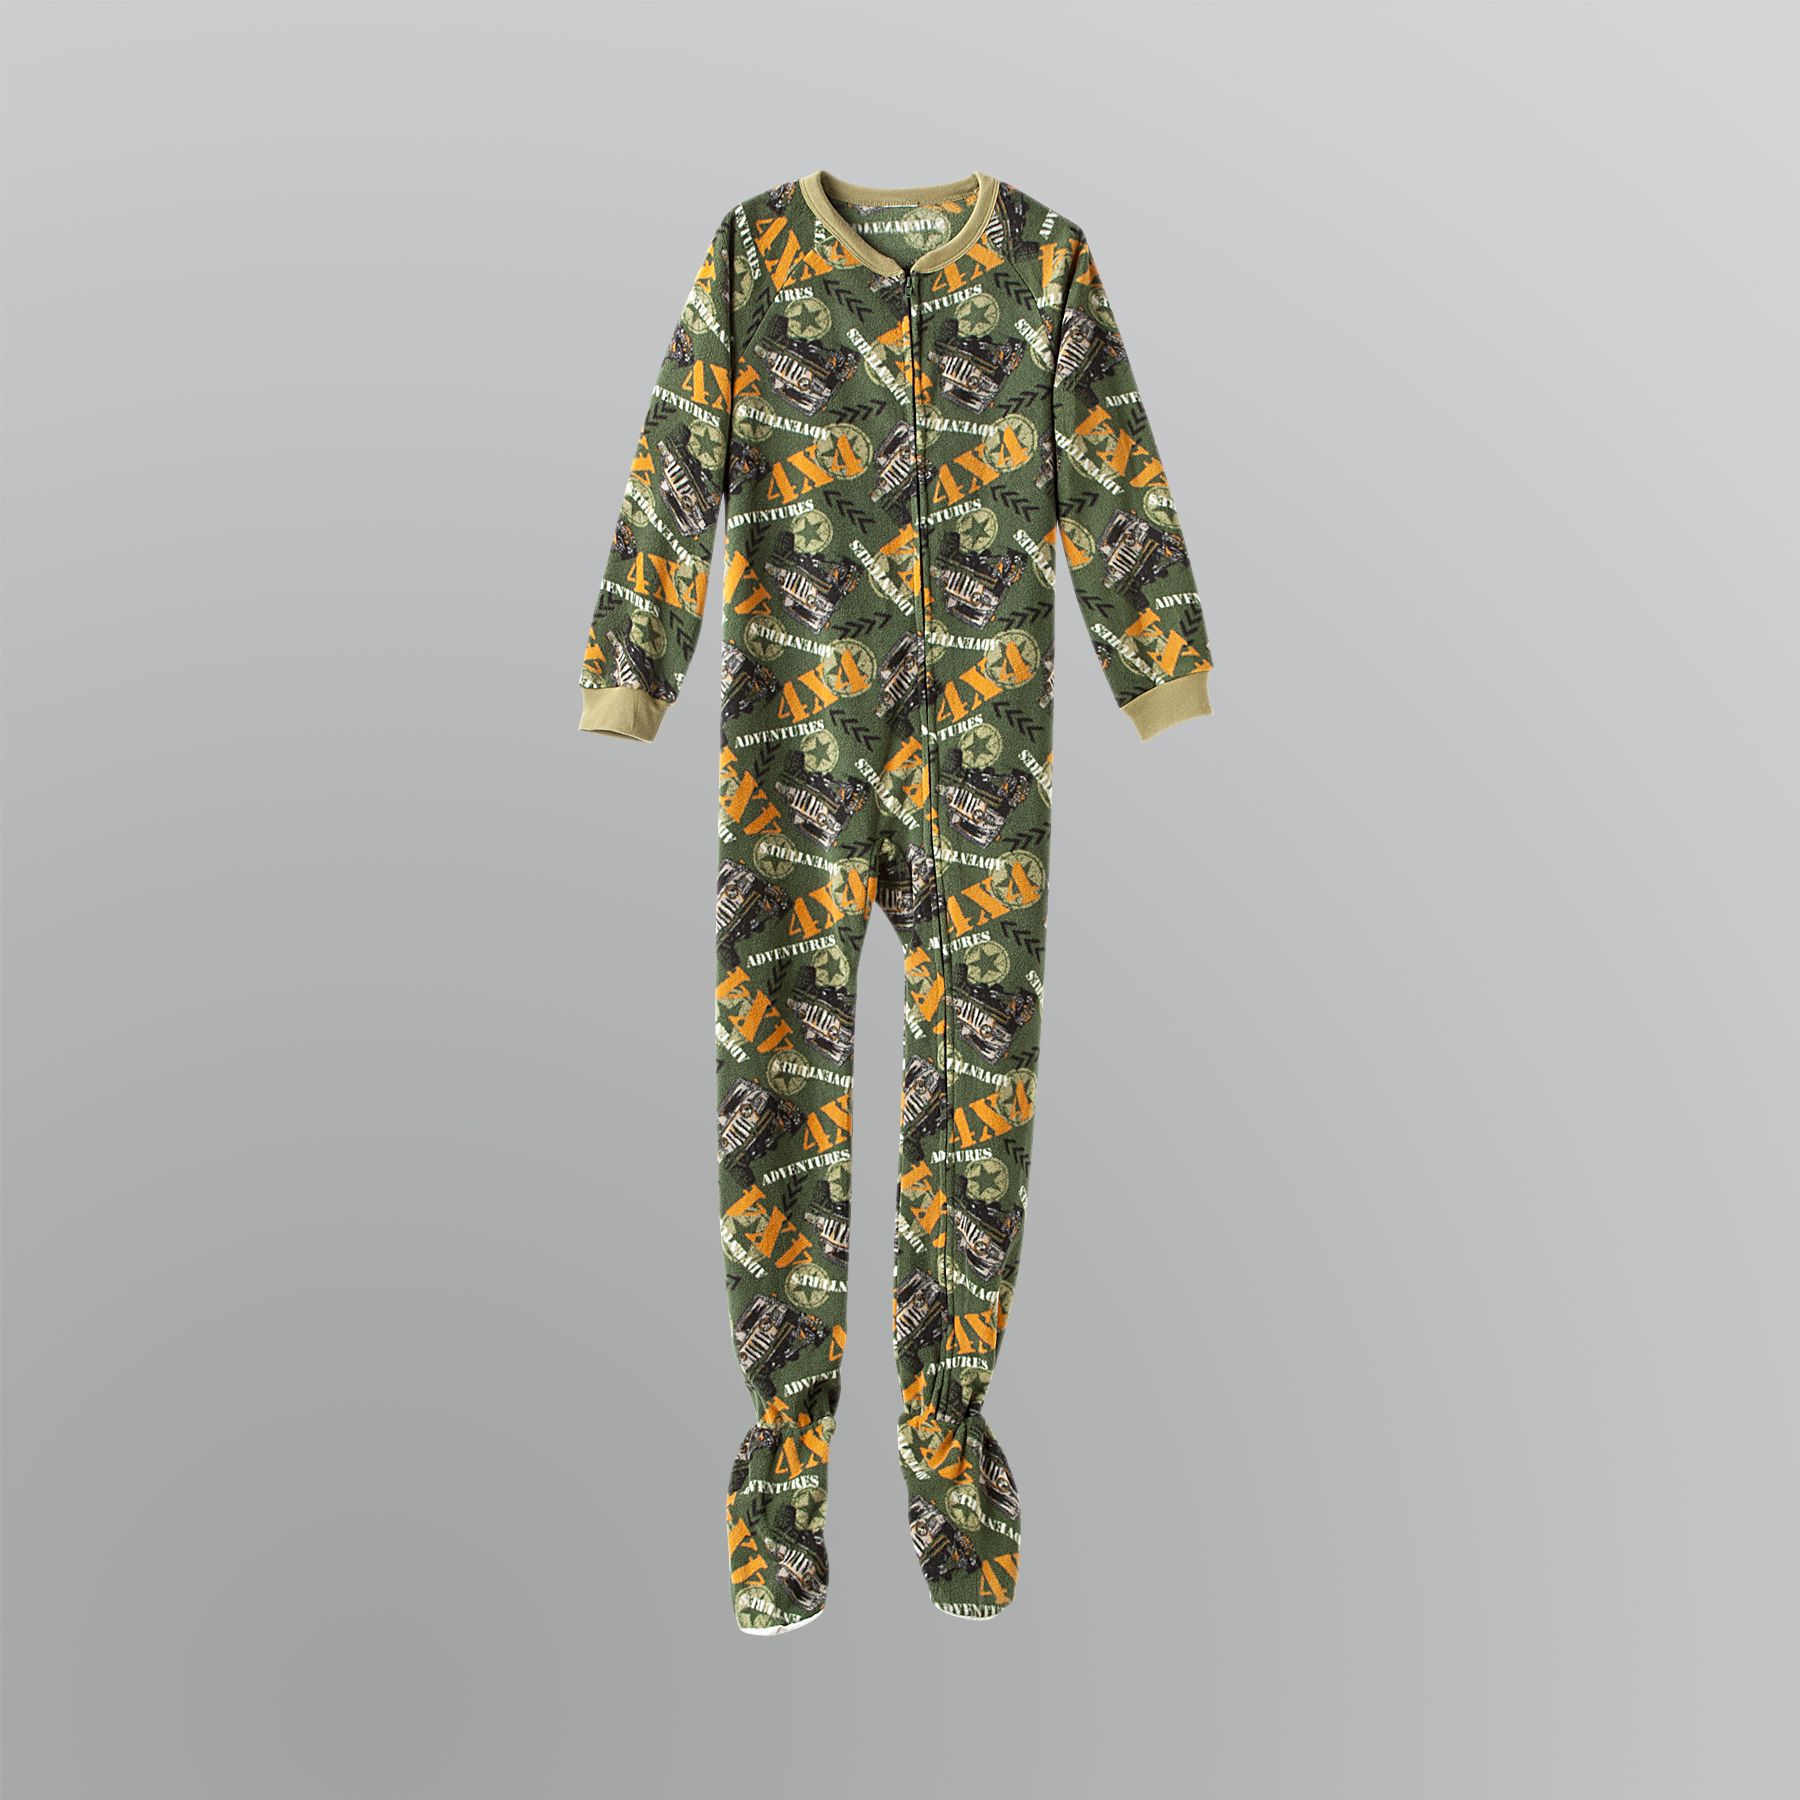 Joe Boxer Boy's fleece footed sleeper pajamas